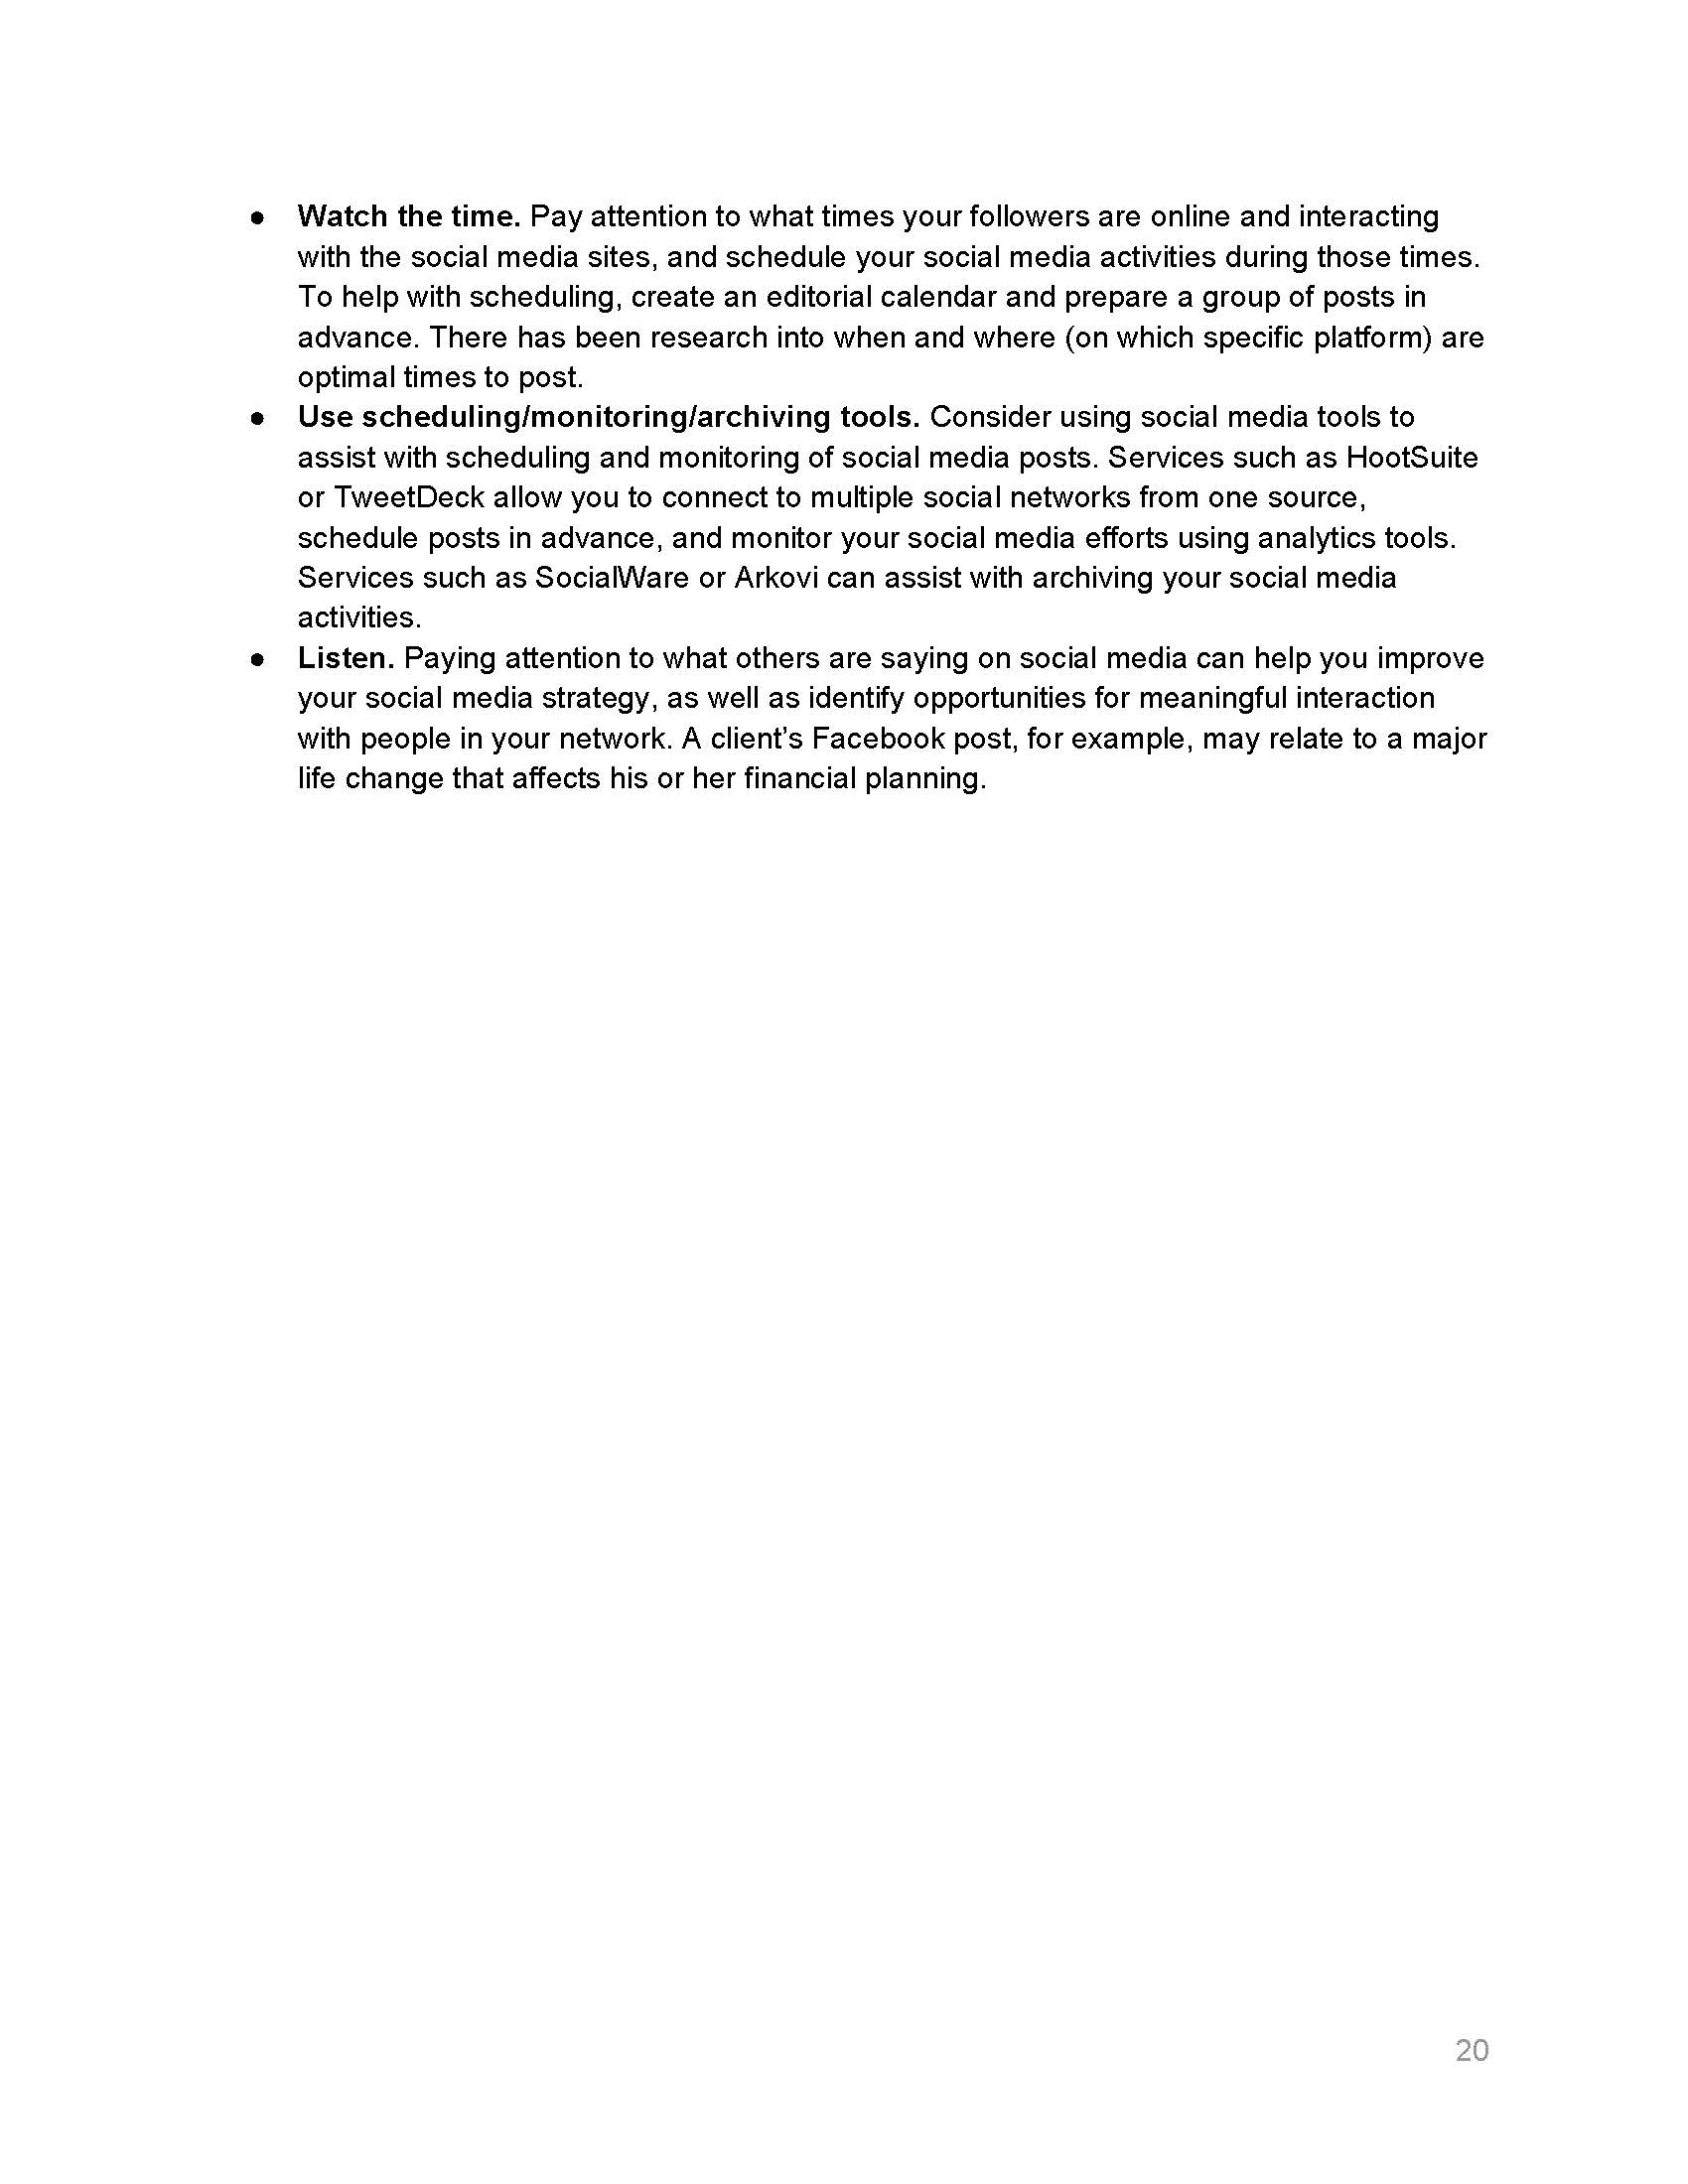 Amity Financial - Social Media White Paper_Page_21.jpg